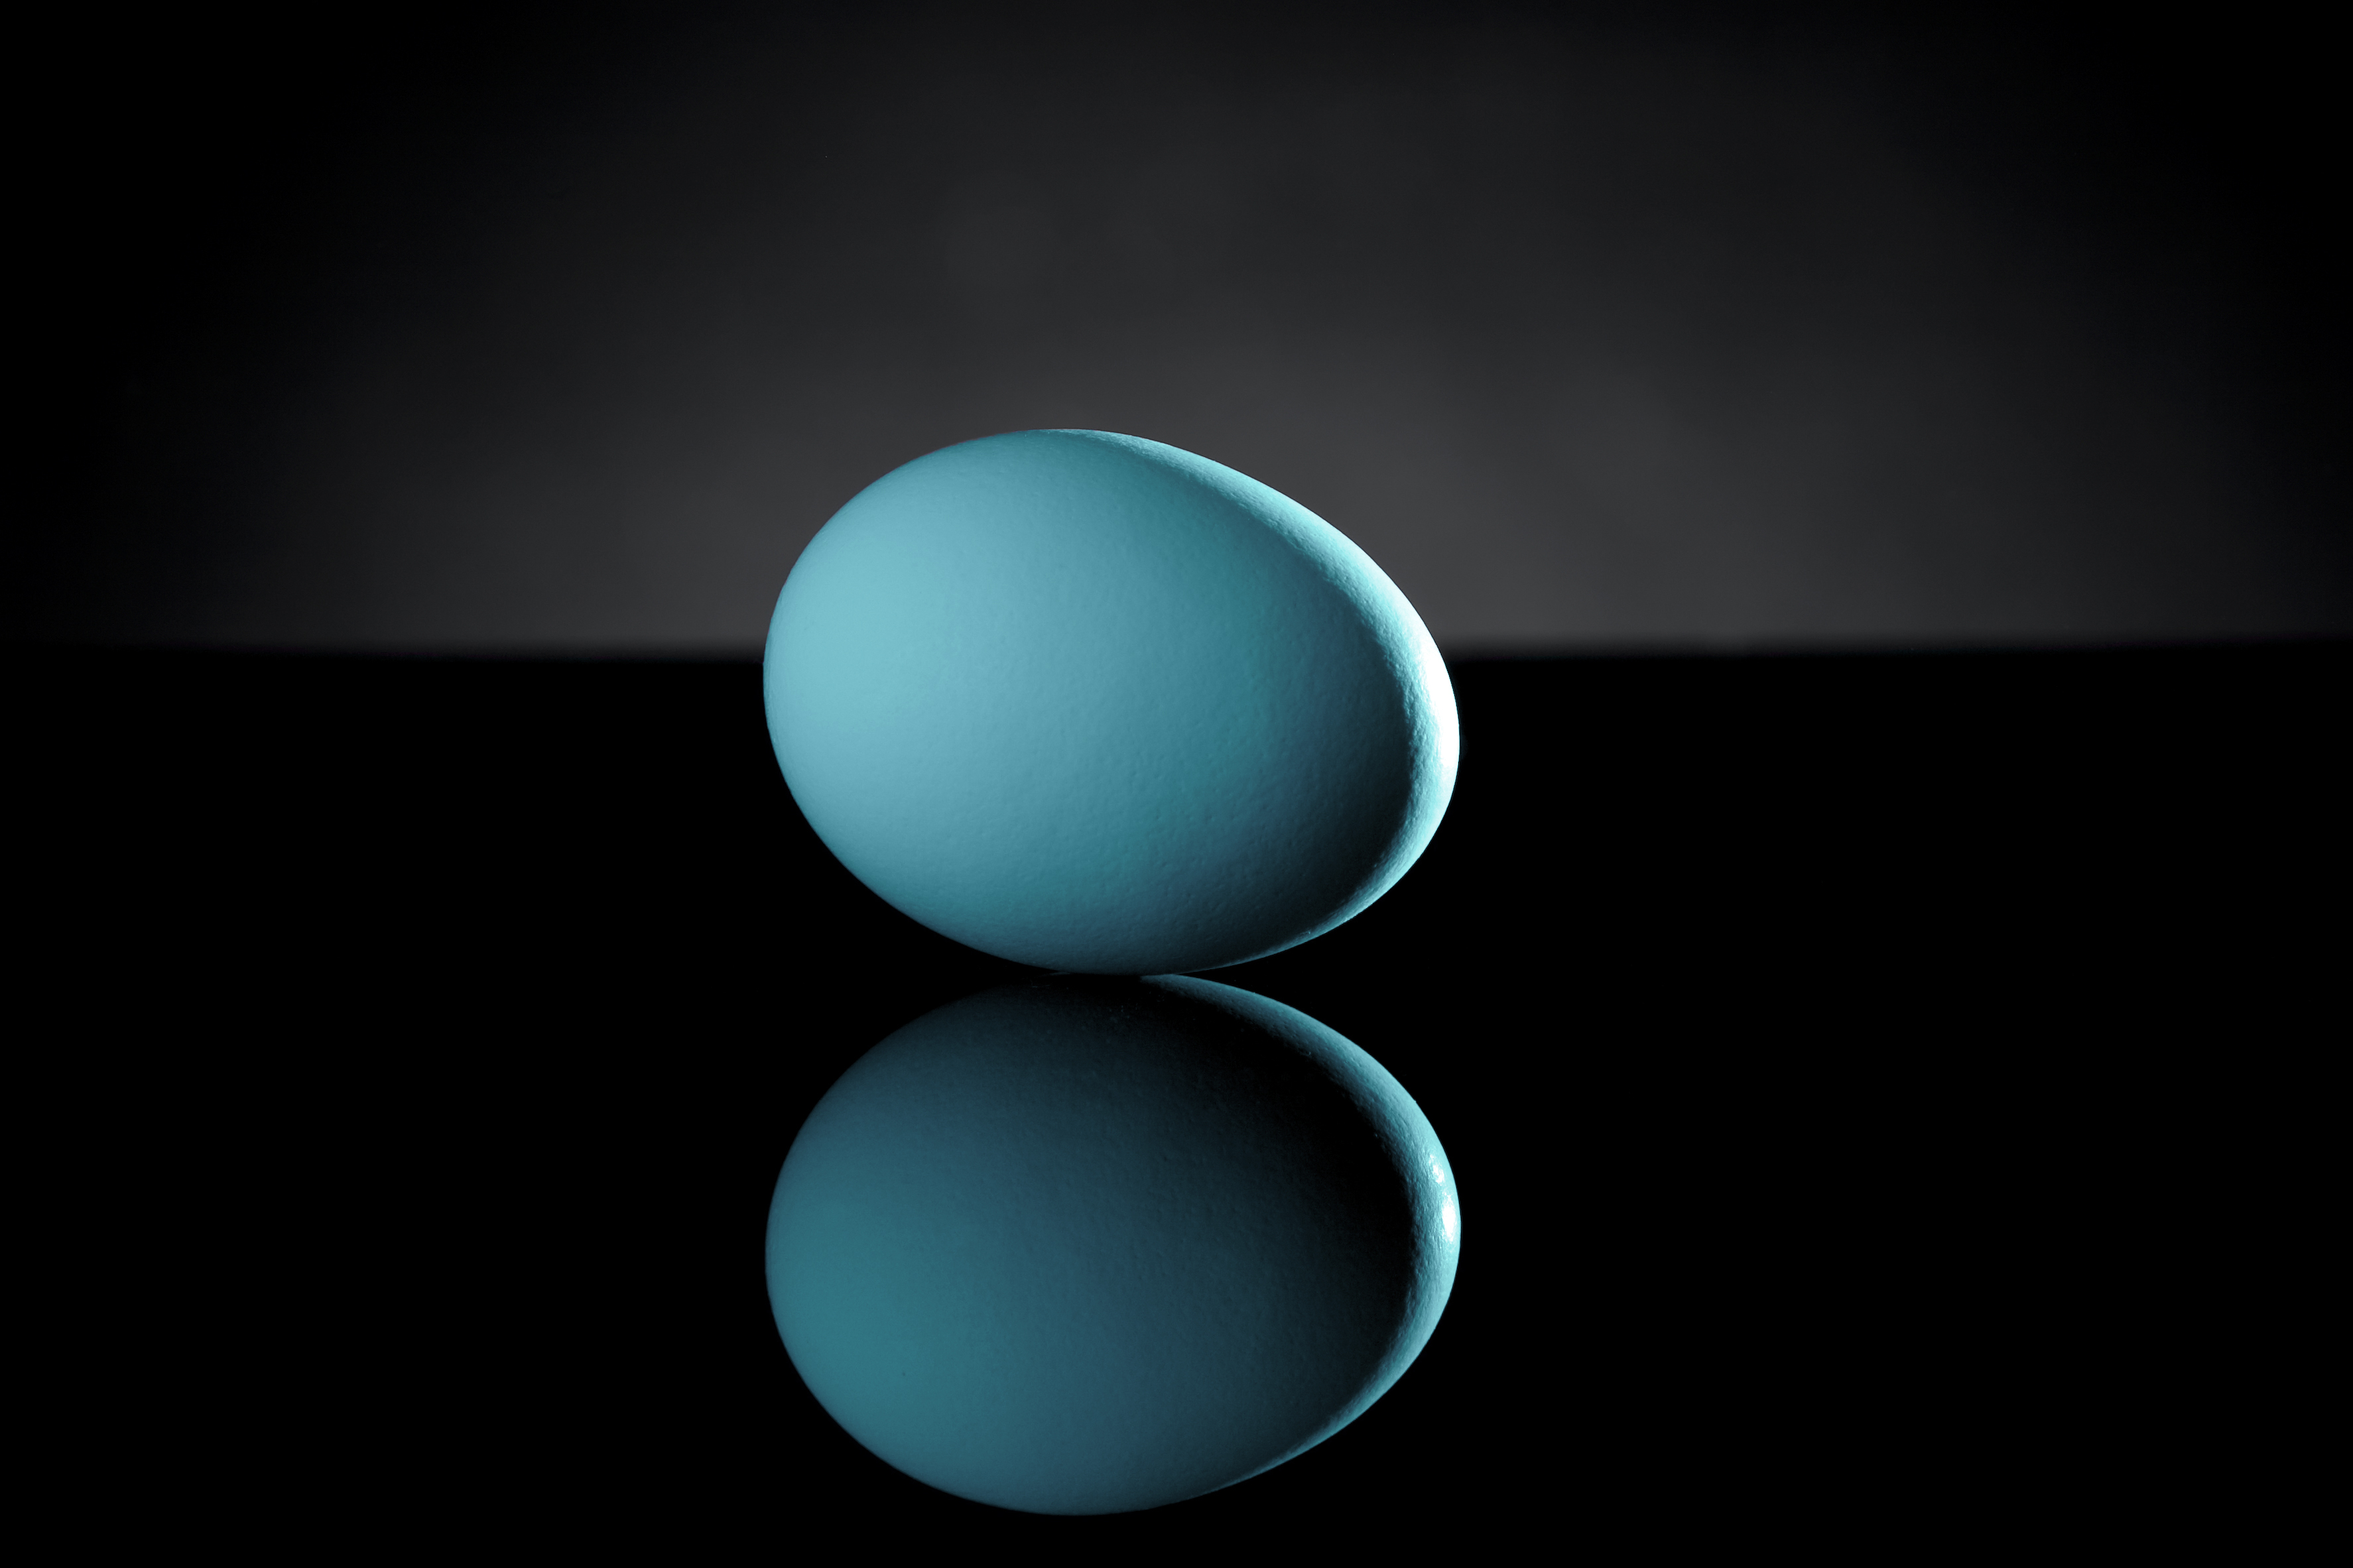 Egg on Black Acrylic with Reflection